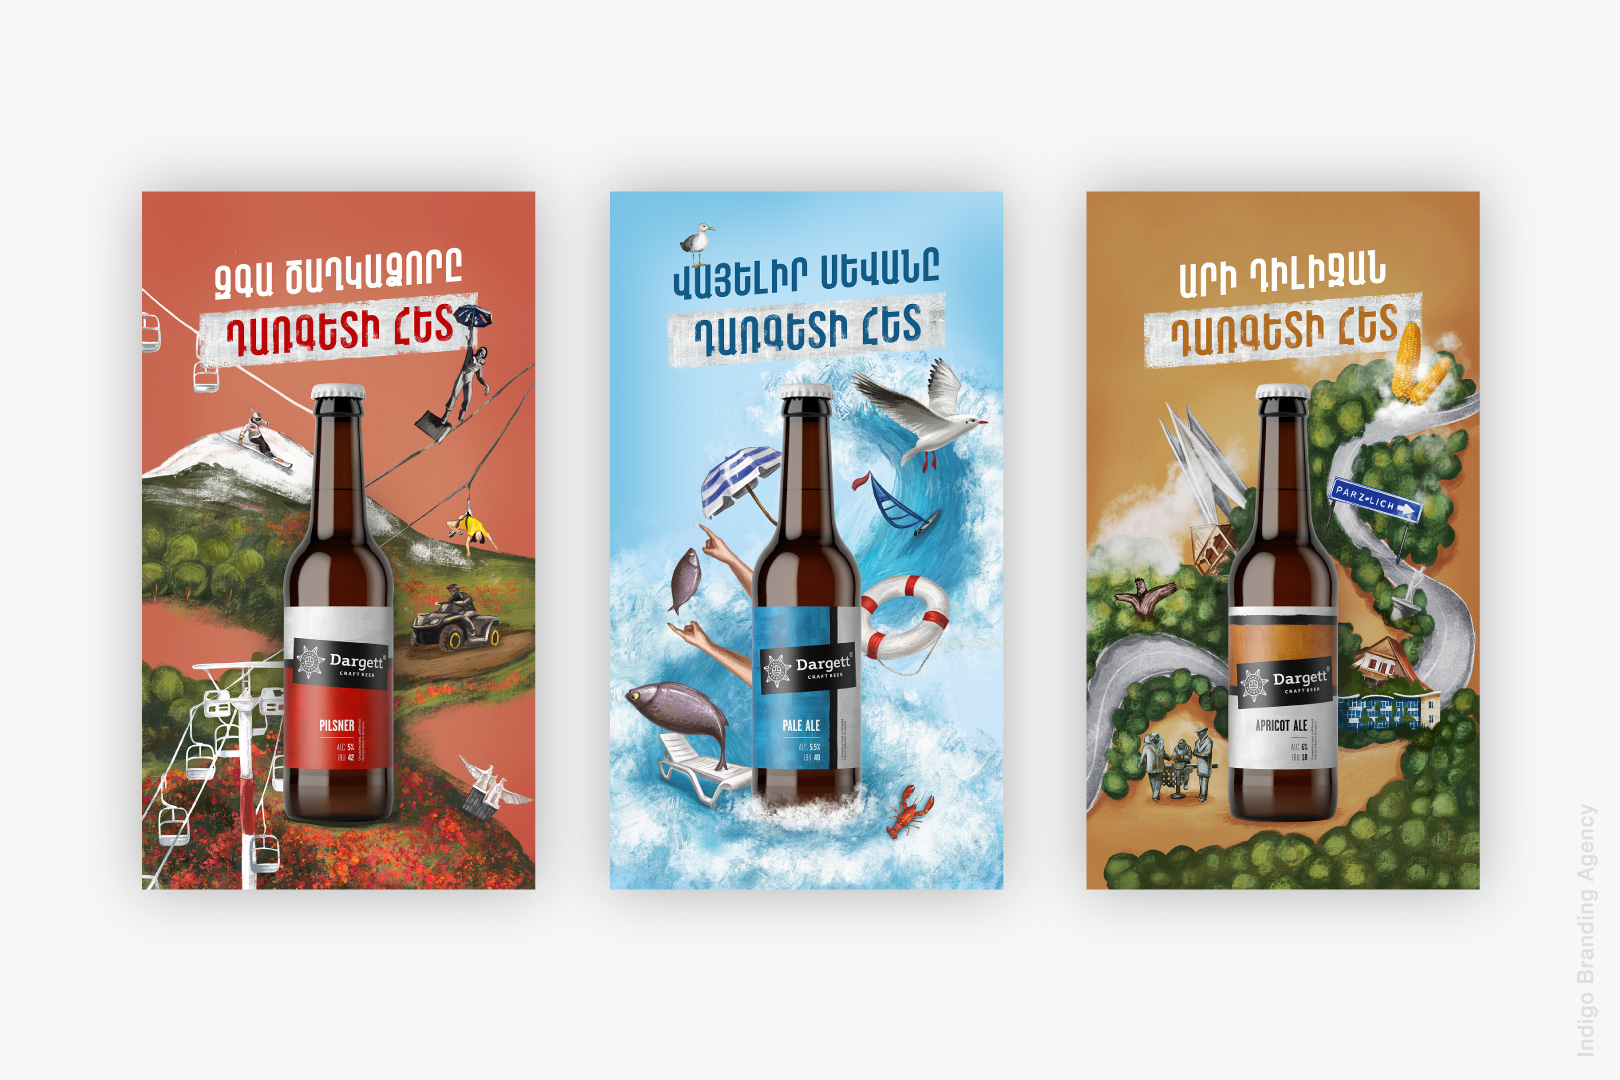 Dargett craft beer advertising outdoor billboard design visual identity by Indigo branding